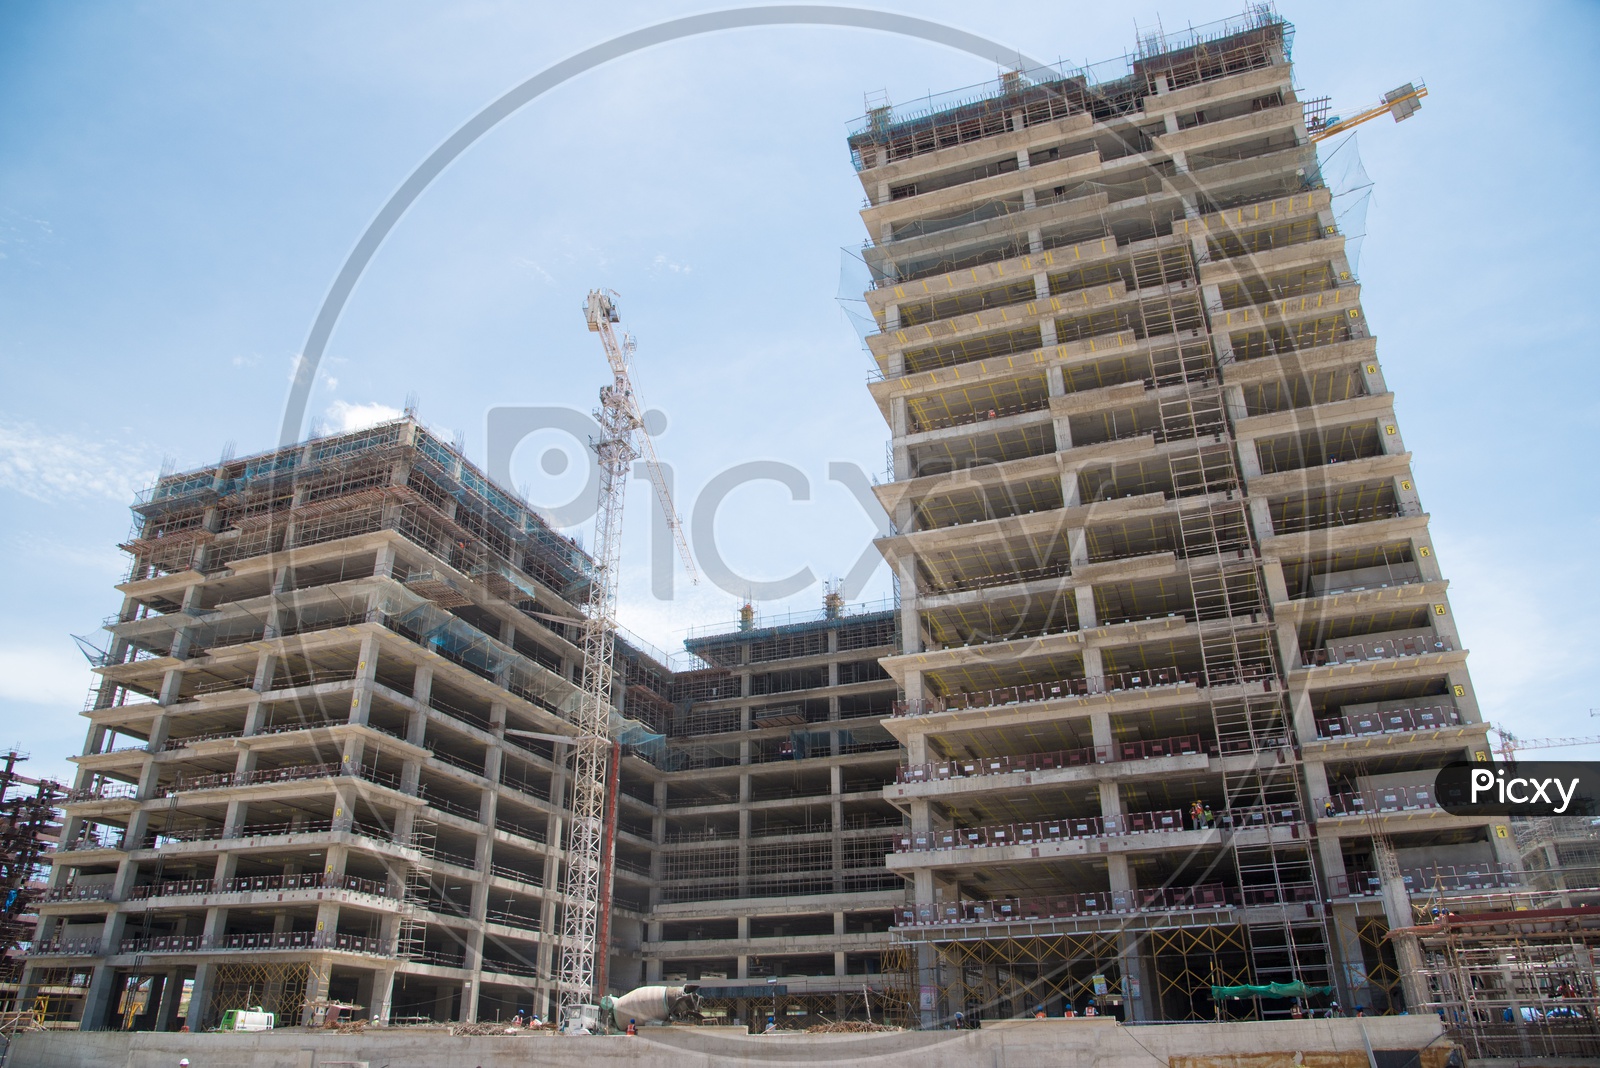 Construction in full boom at Knowledge City IT Park, Gachibowli